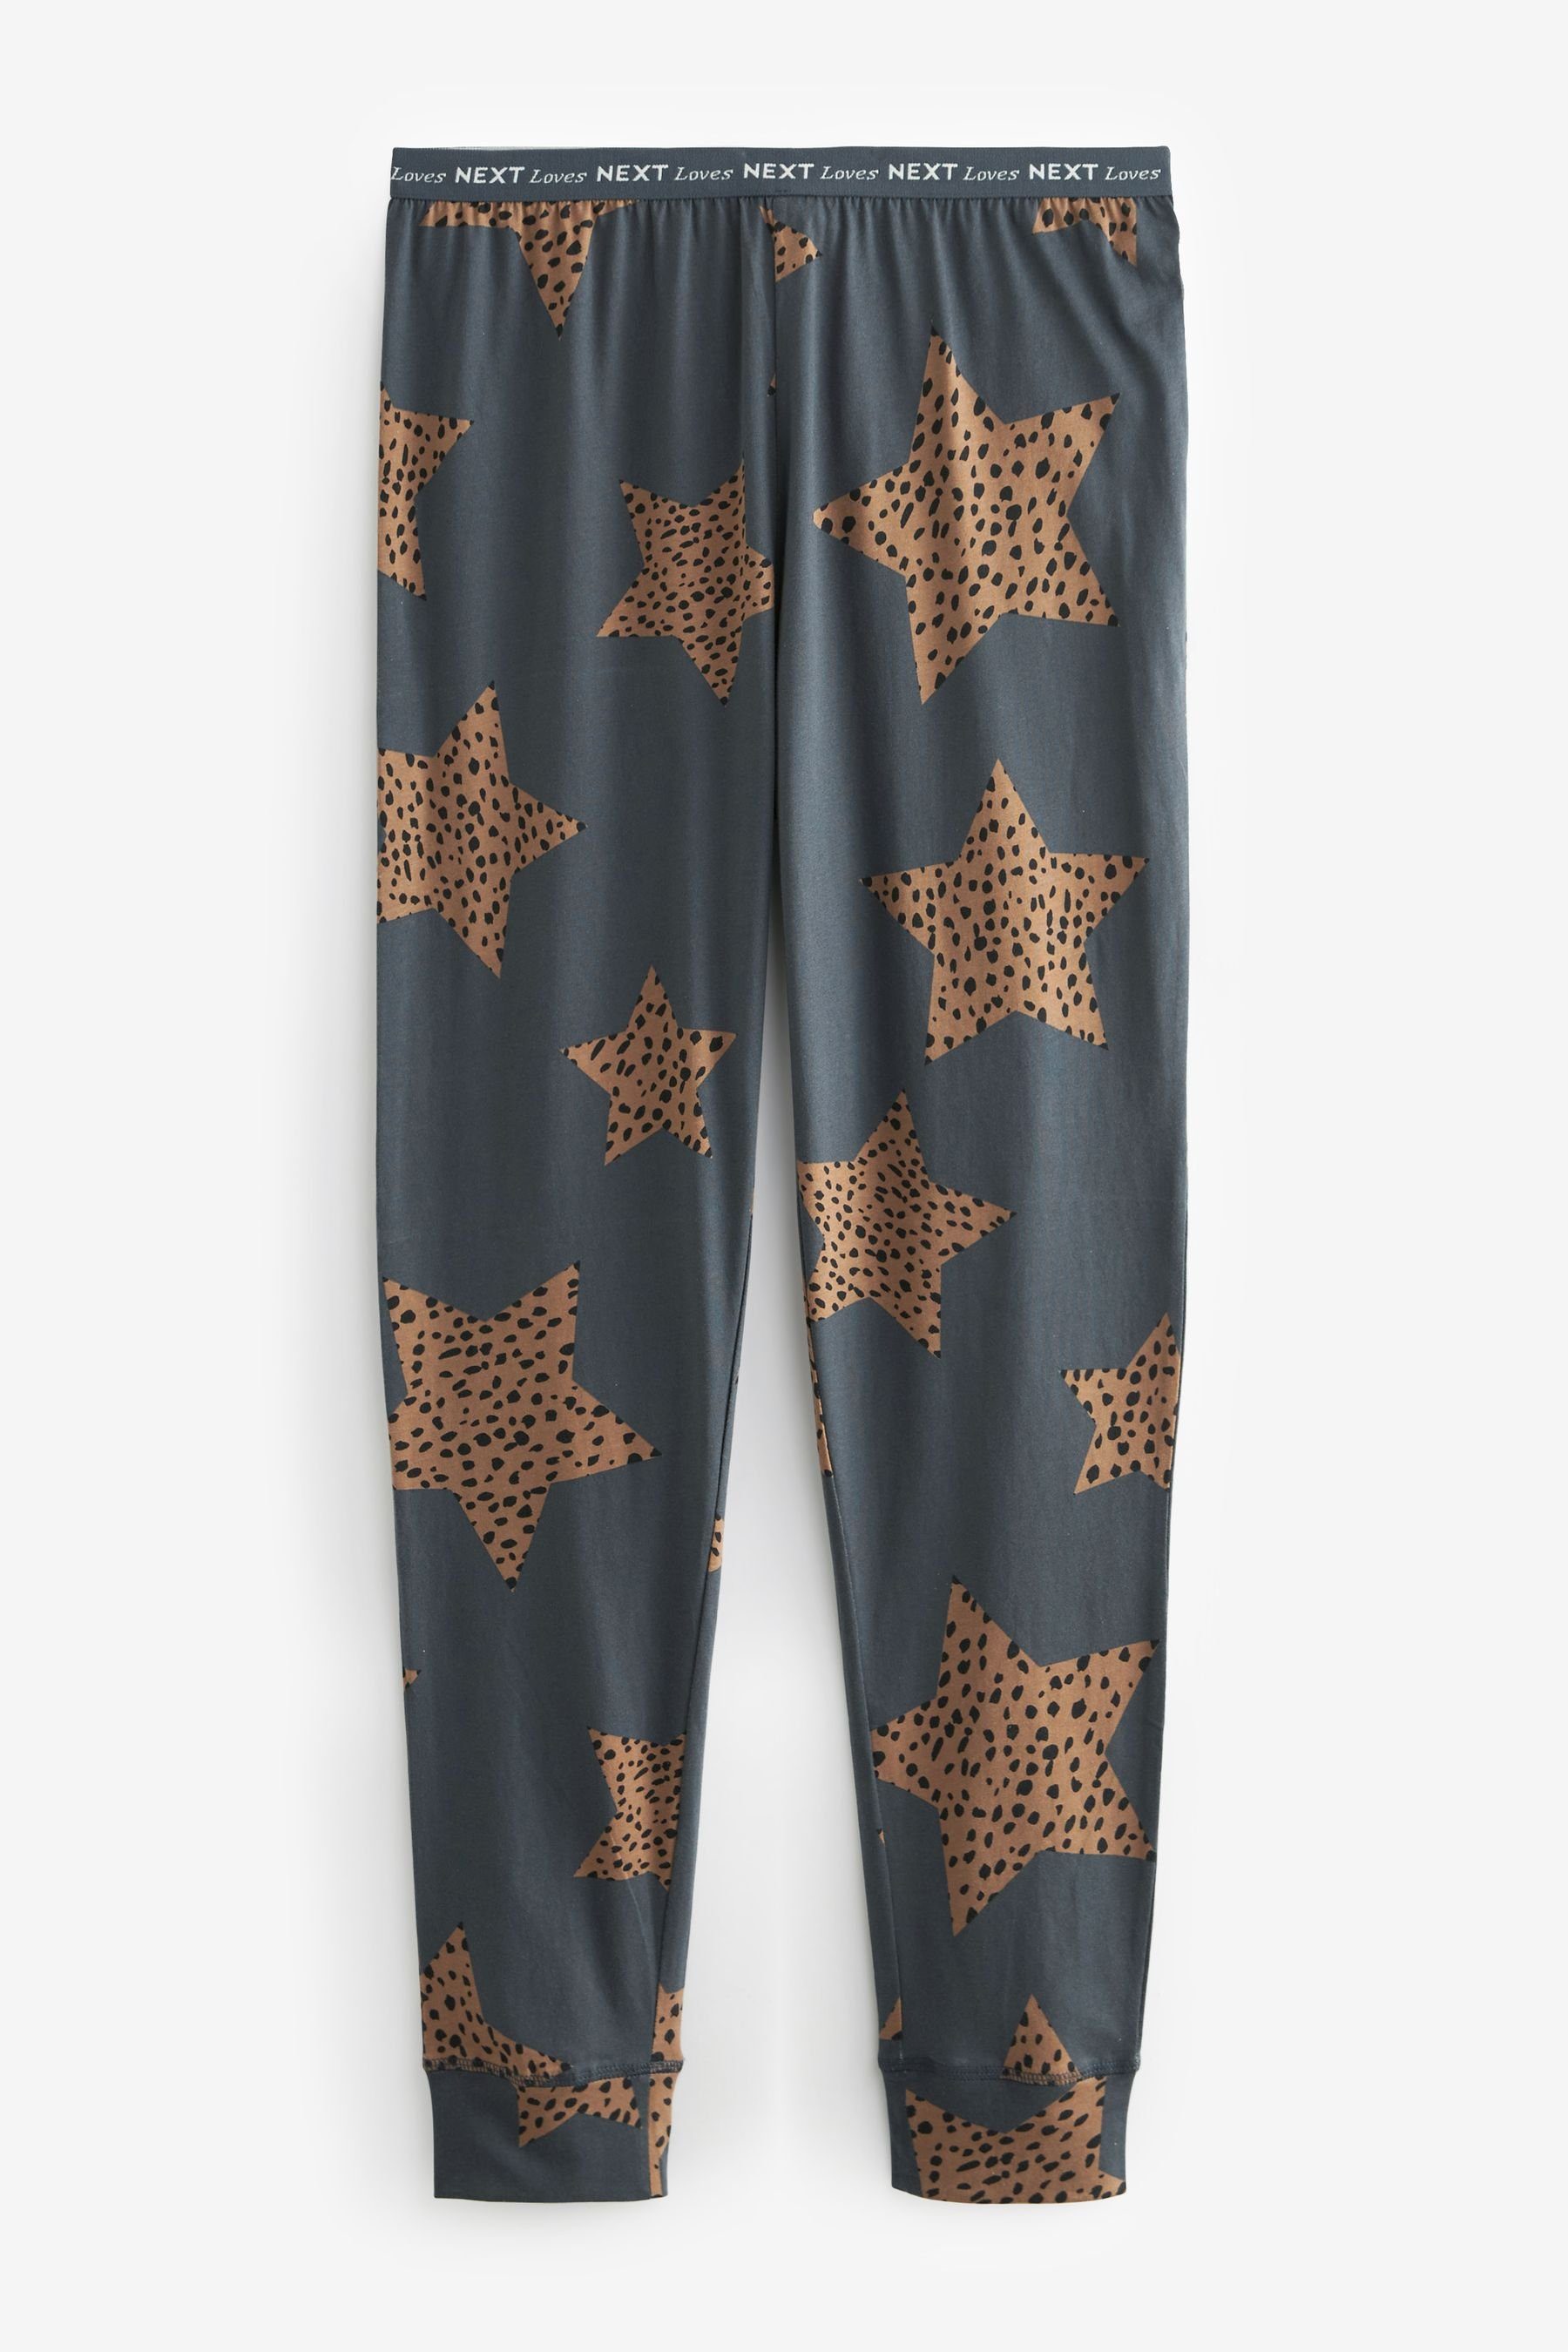 tlg) Next Pyjama Langärmeliger Pyjama Baumwolle Charcoal aus (2